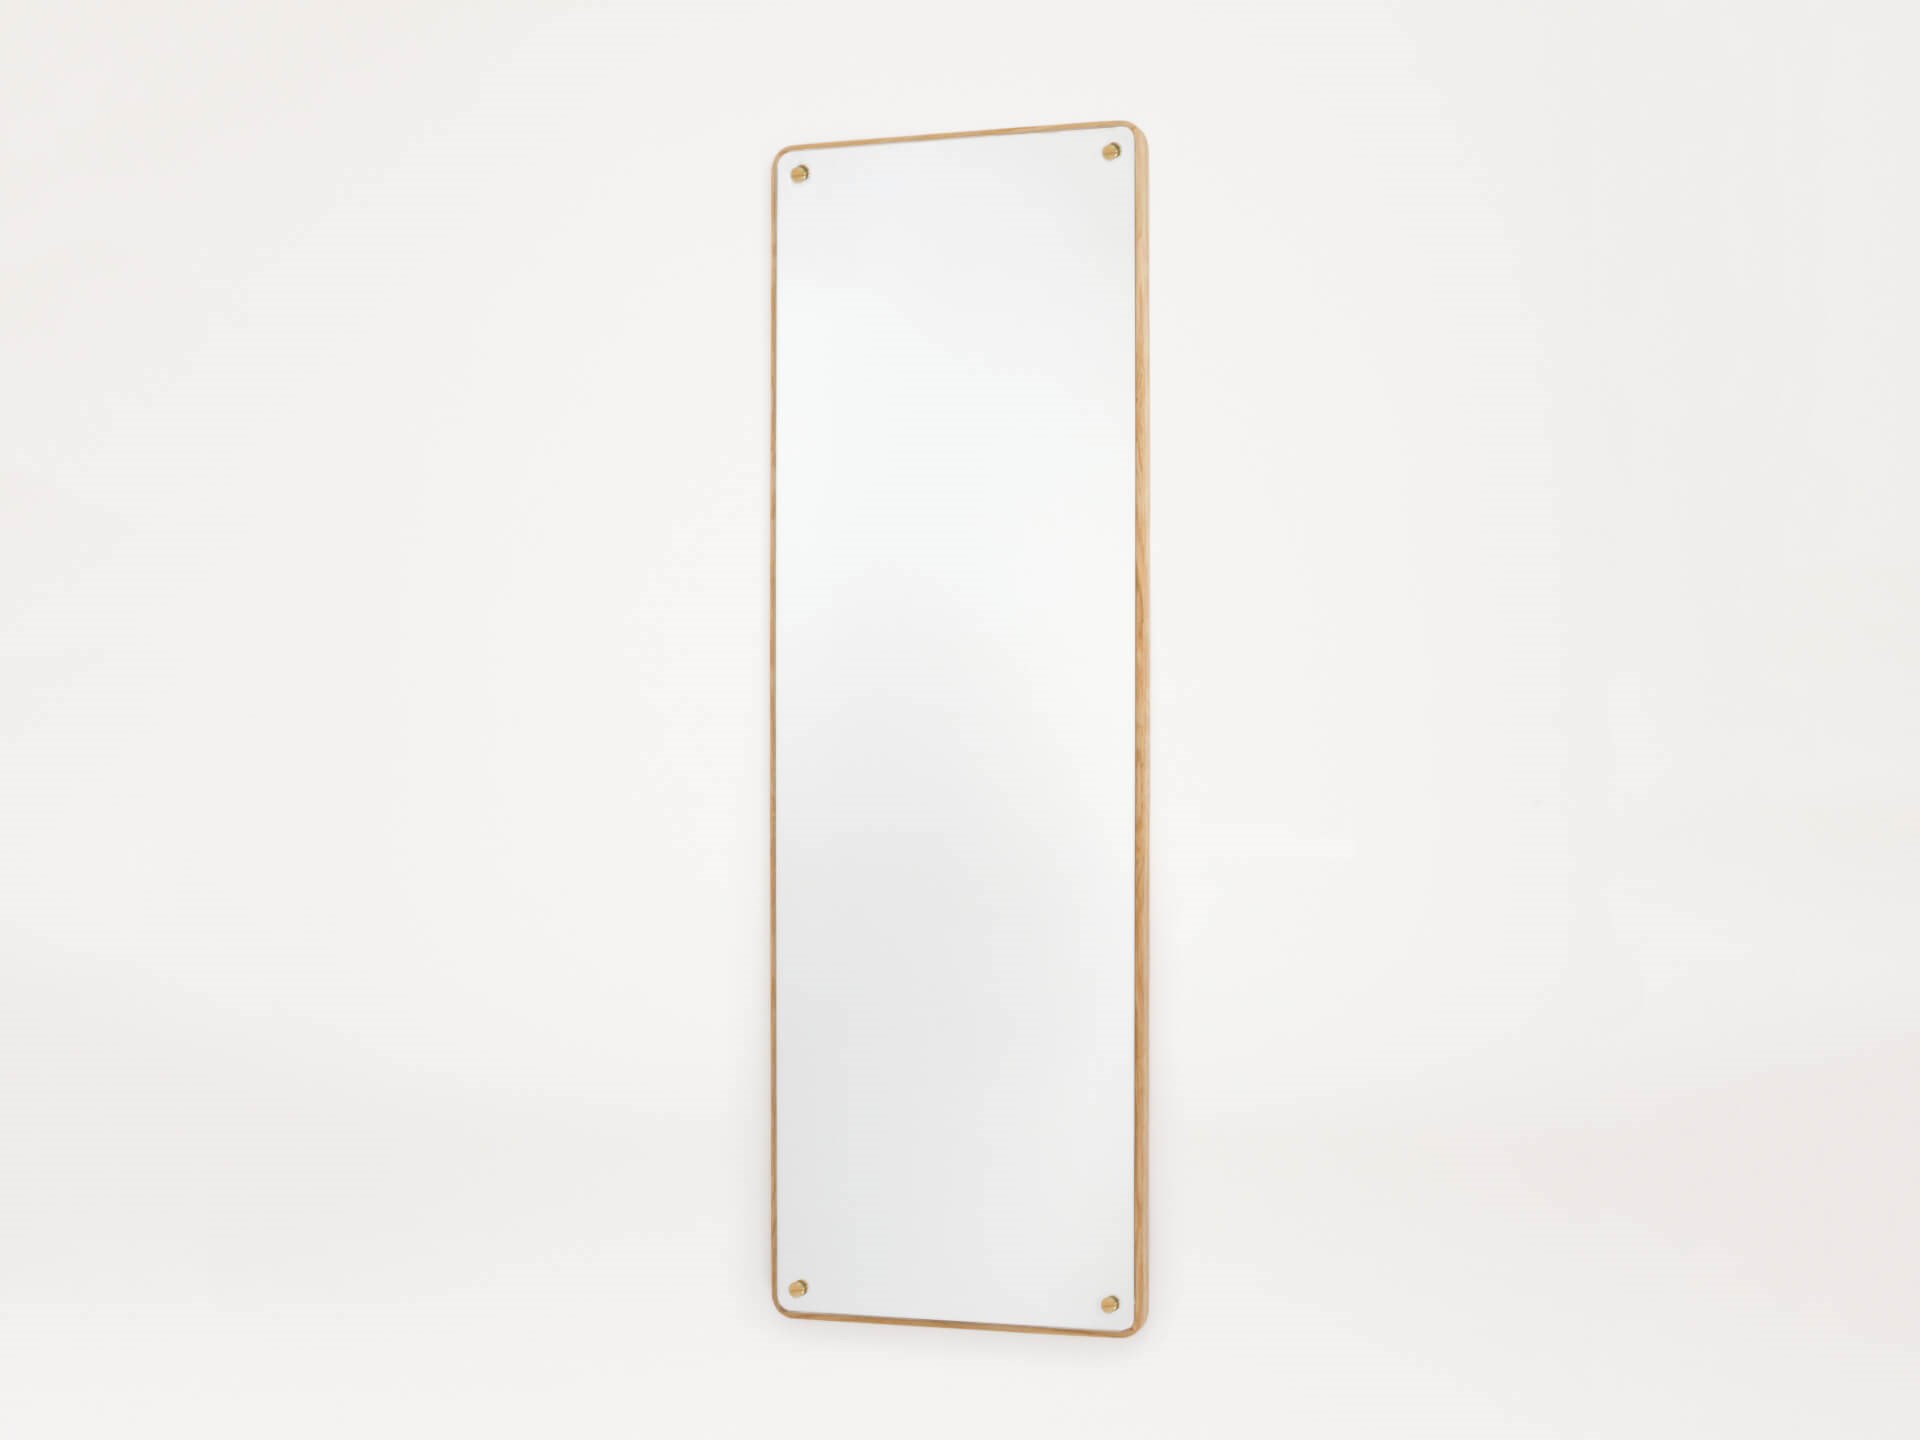 Frama RM-1 mirror